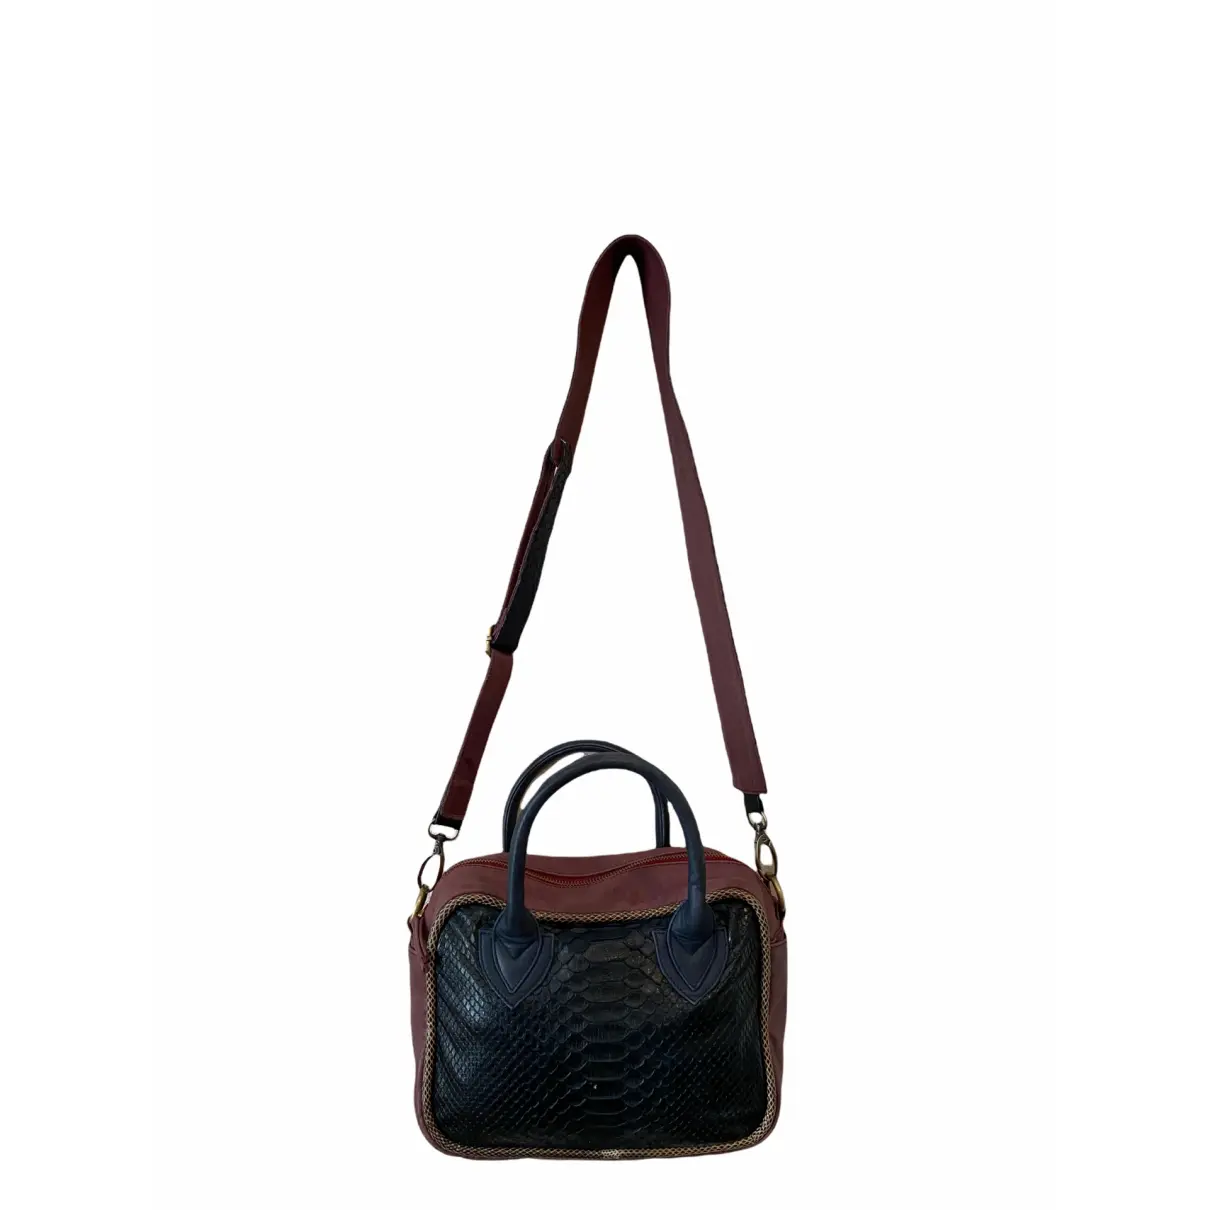 Buy Isabelle Farrugia Leather crossbody bag online